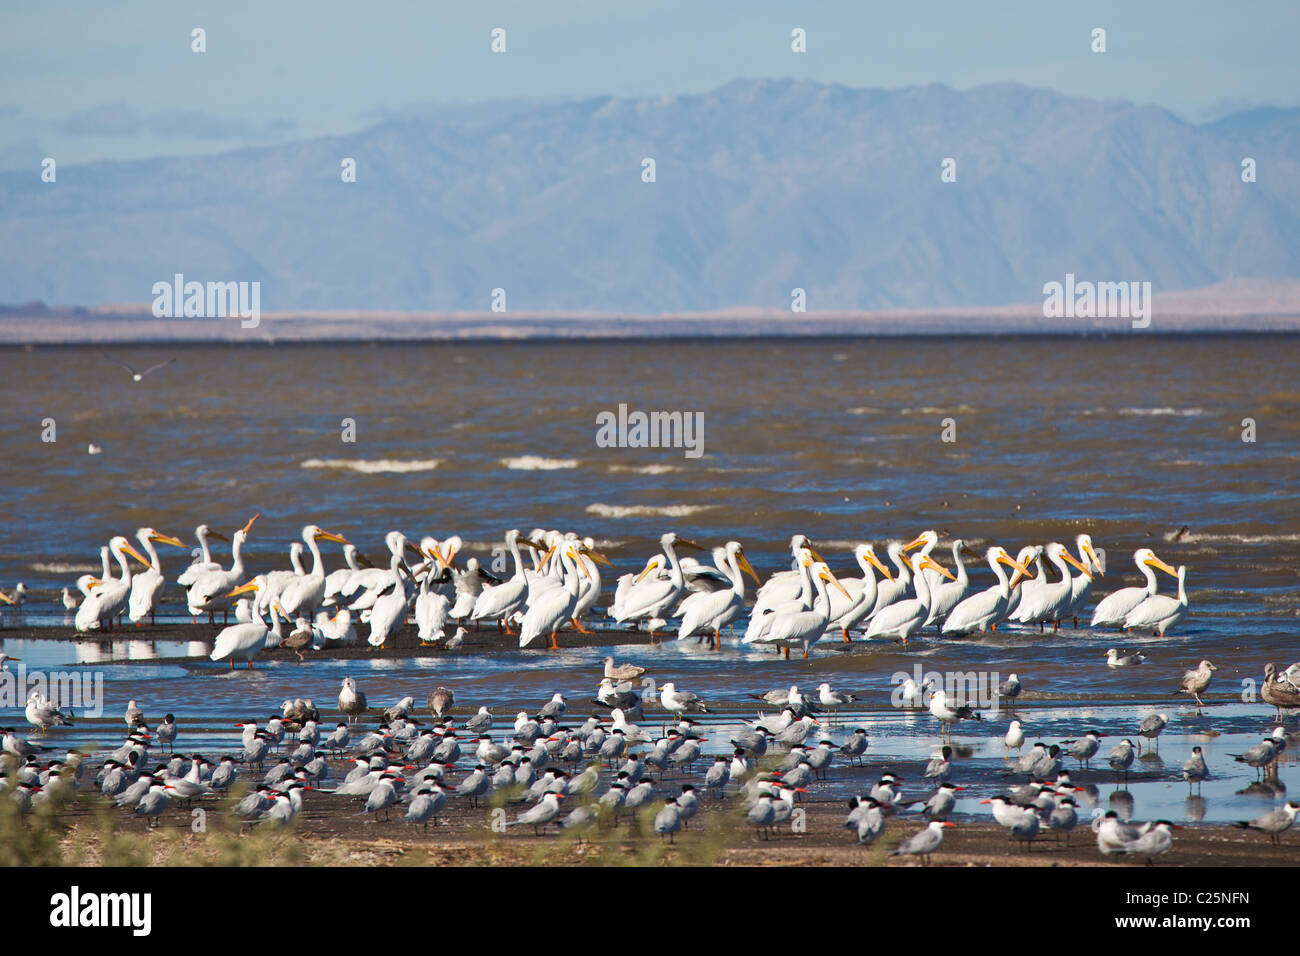 Migrating birds at the Sono Bono National Wildlife Preserve on the Salton Sea, California Stock Photo